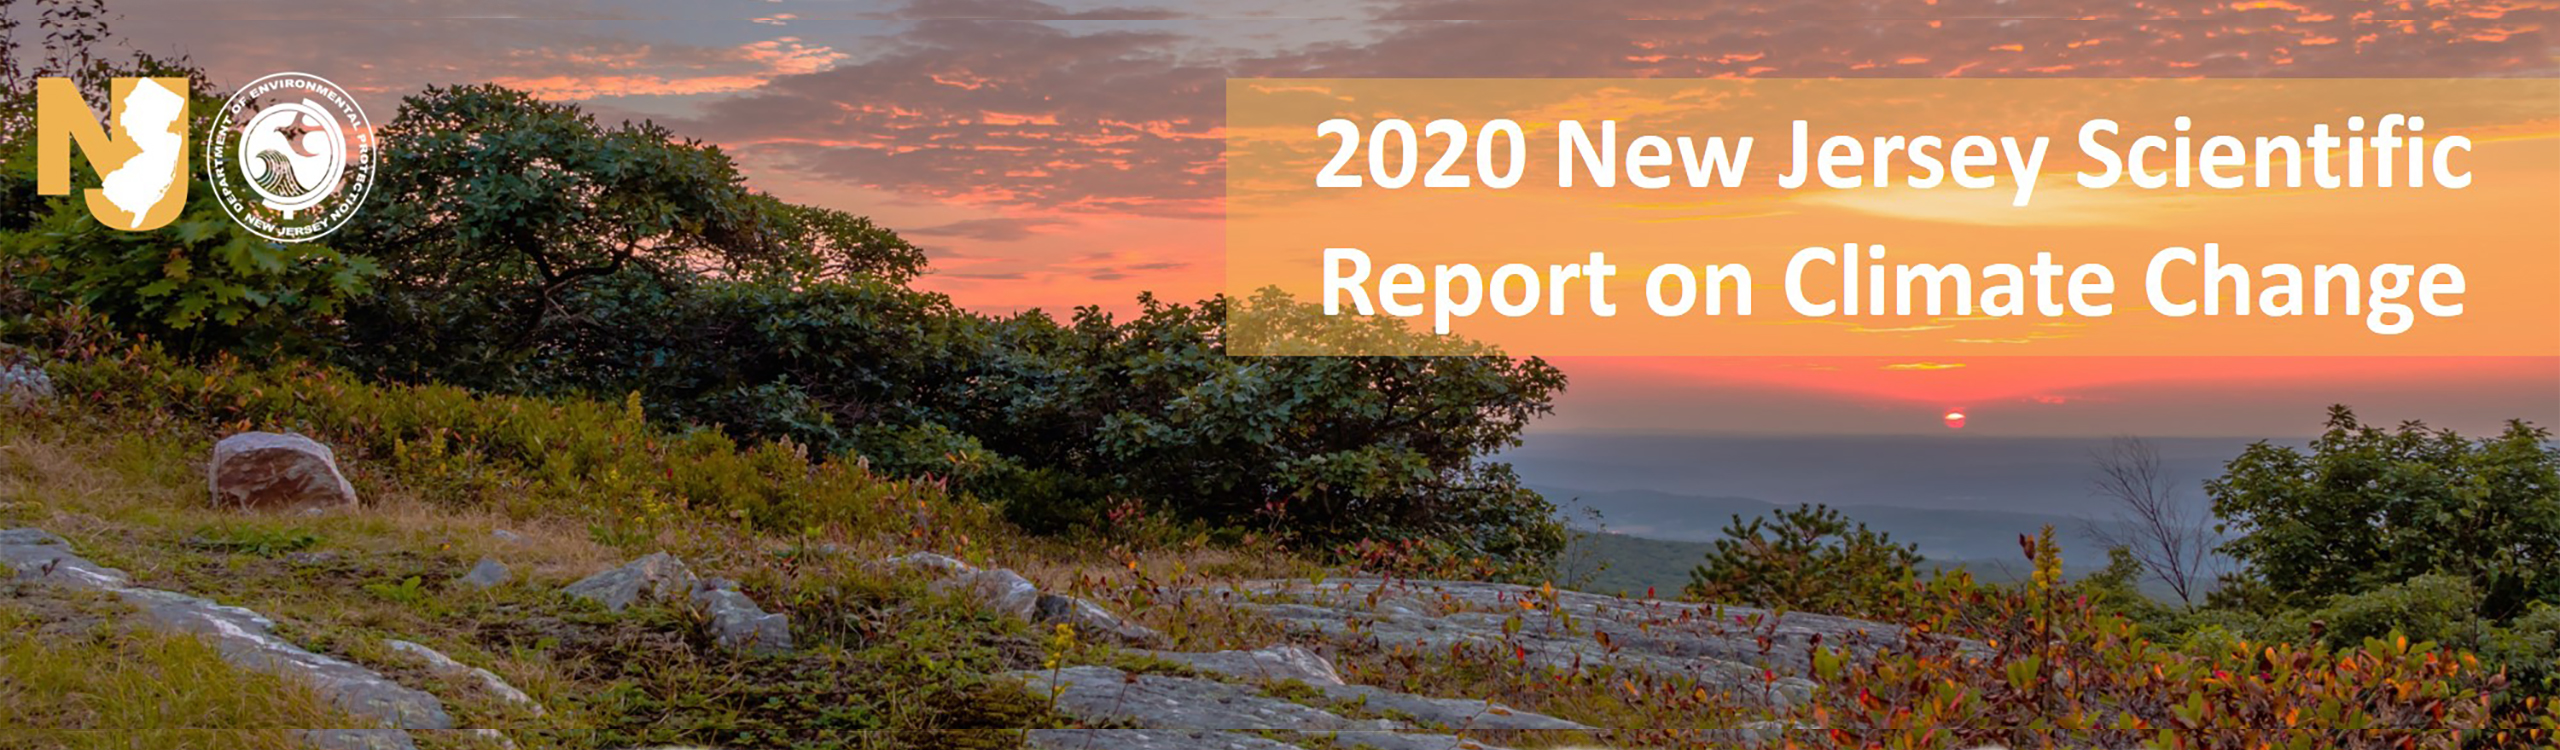 NJ Climate Change Report 2020